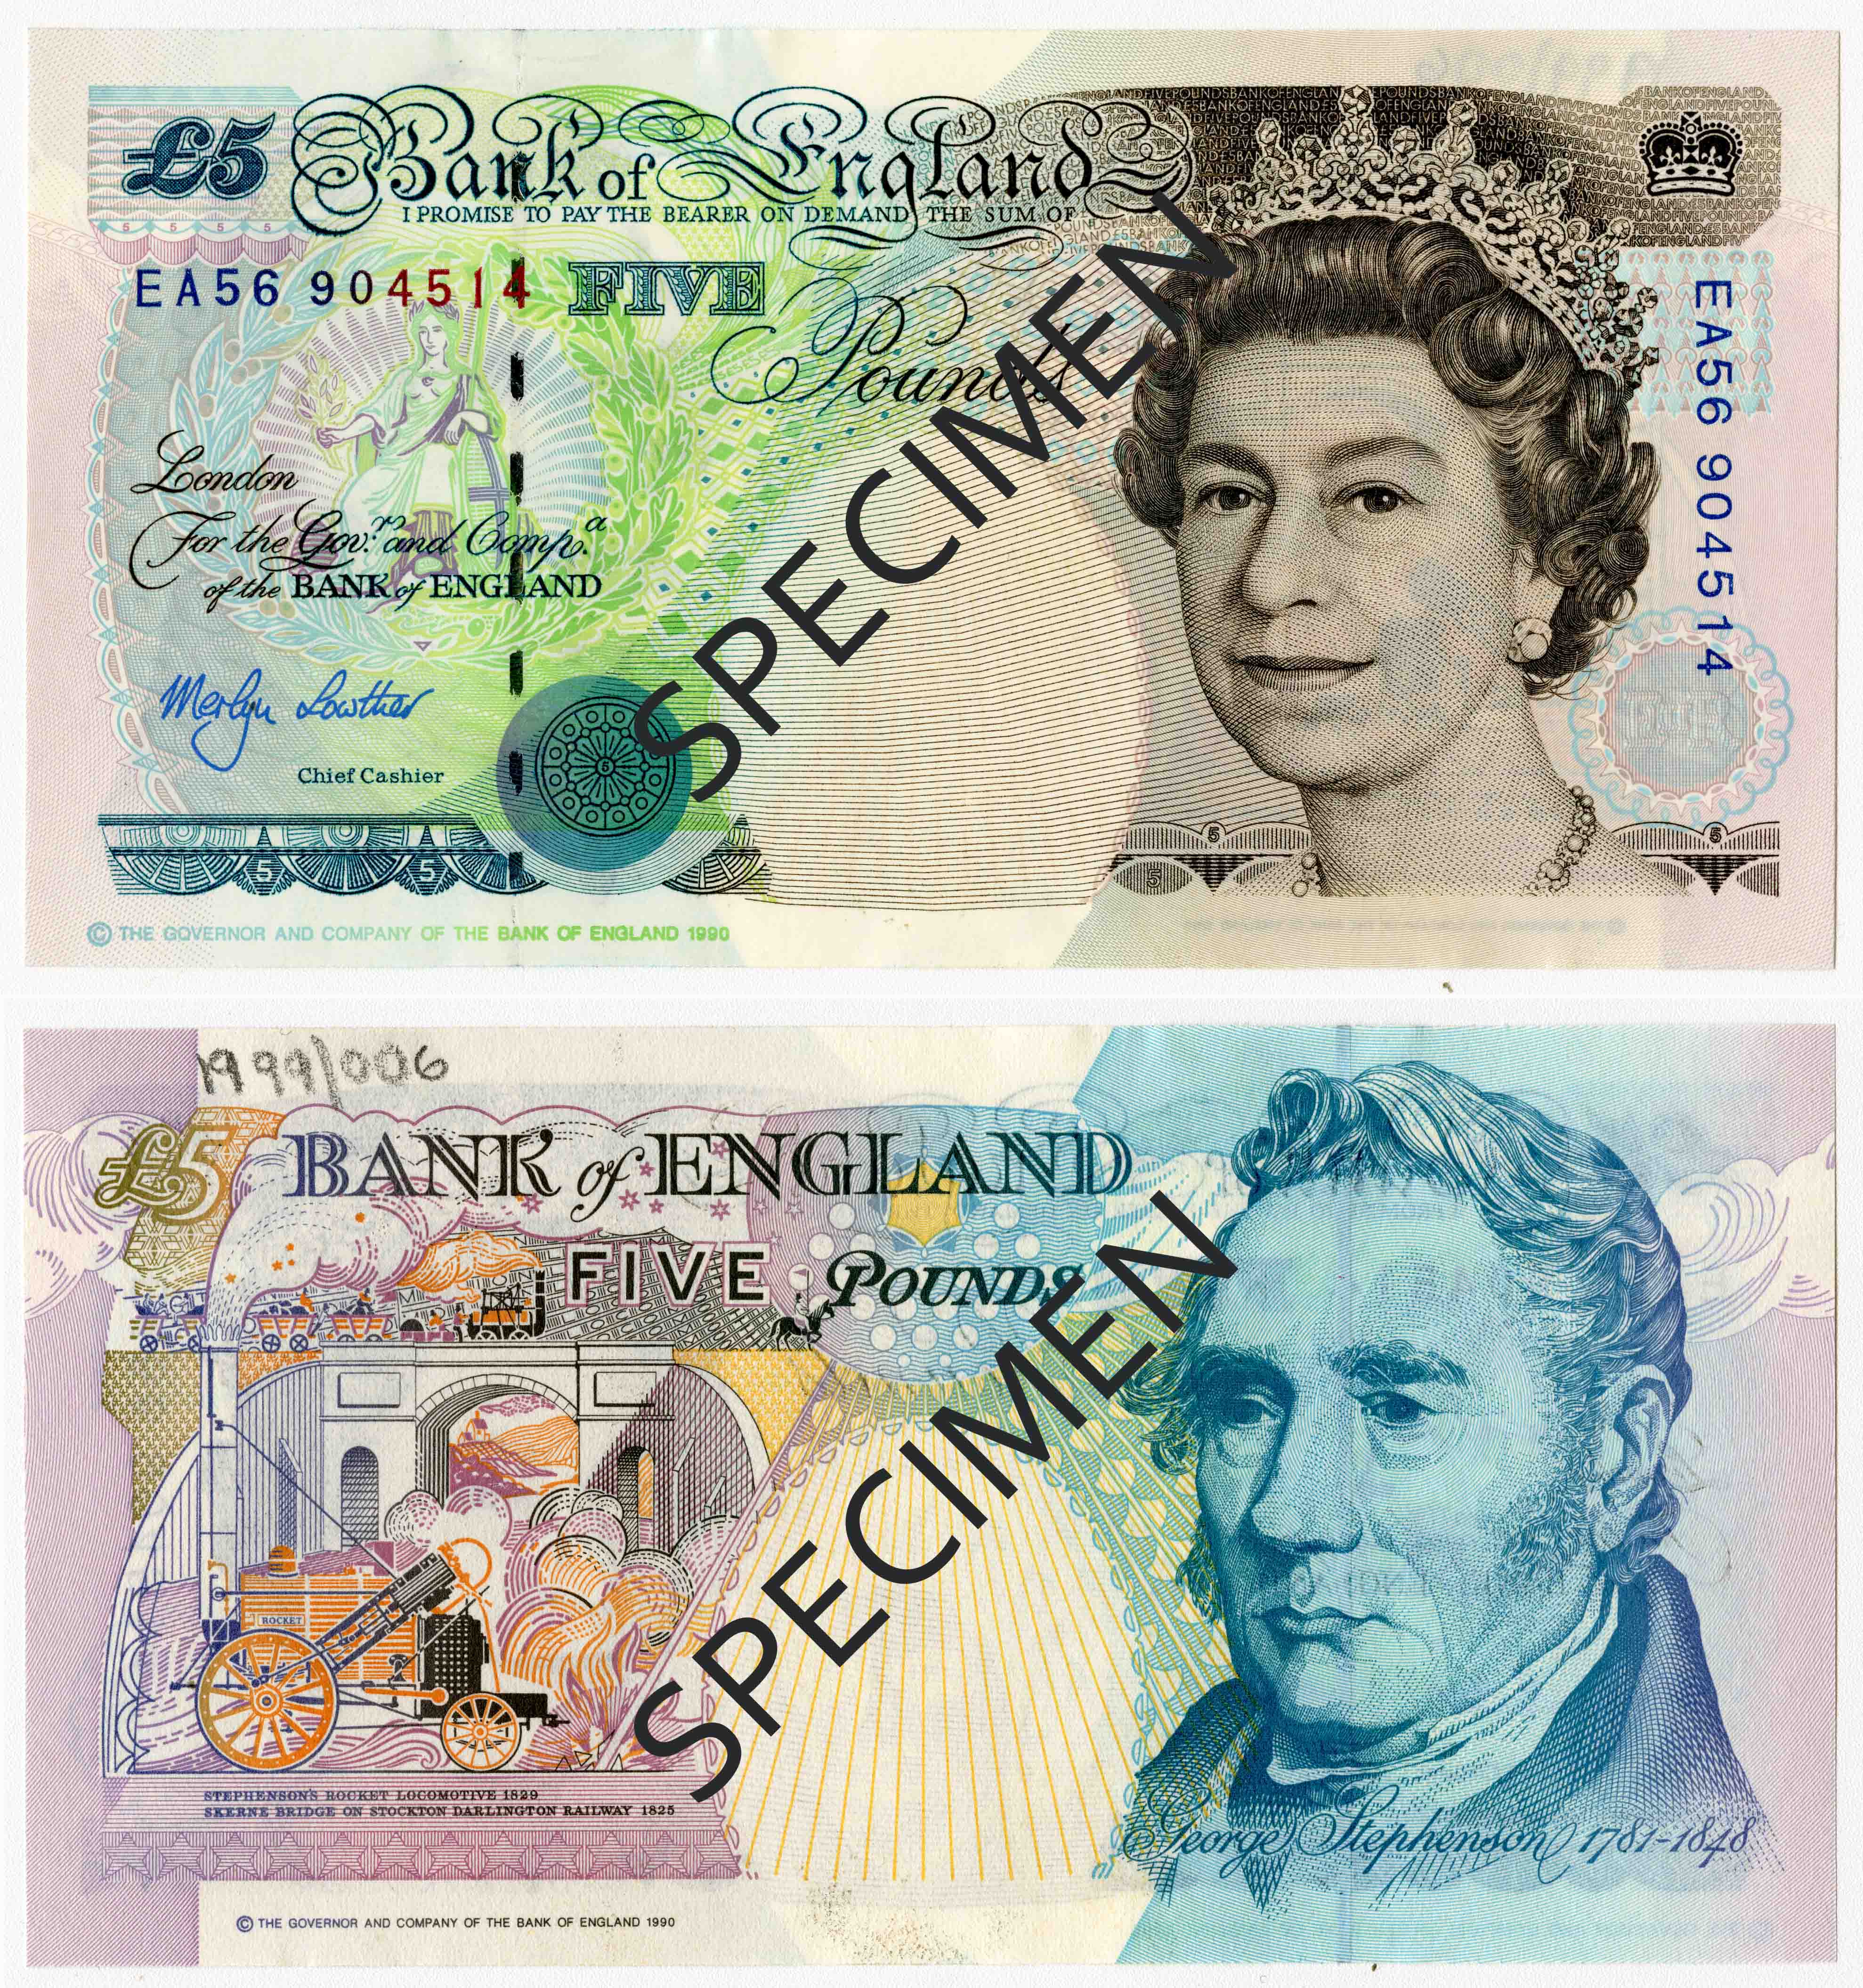 https://www.bankofengland.co.uk/-/media/boe/images/banknotes/withdrawn/5e-revised-1999006.jpg?h=359&la=en&mh=359&w=336&hash=C9E8DE688AF99066C32185C70F222D63FBF556A9
